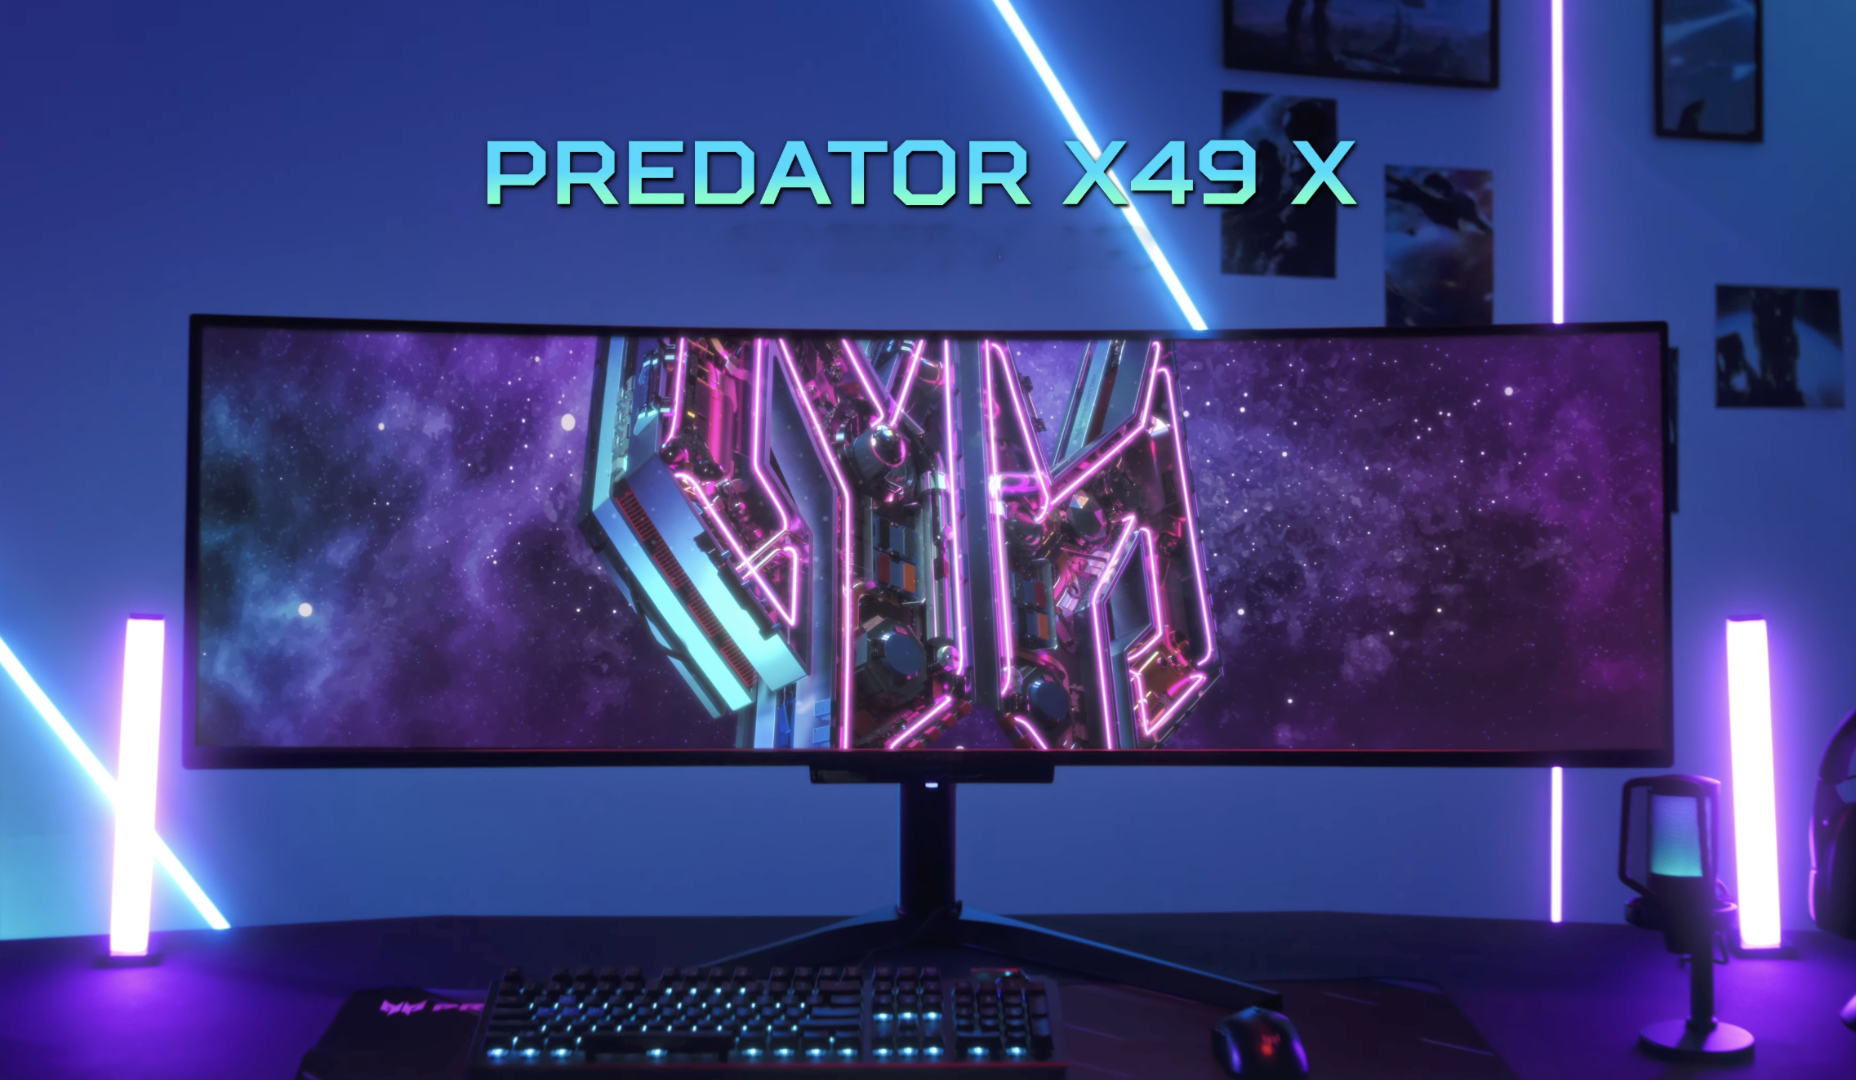 predator-x49-x-monitor-header.jpg